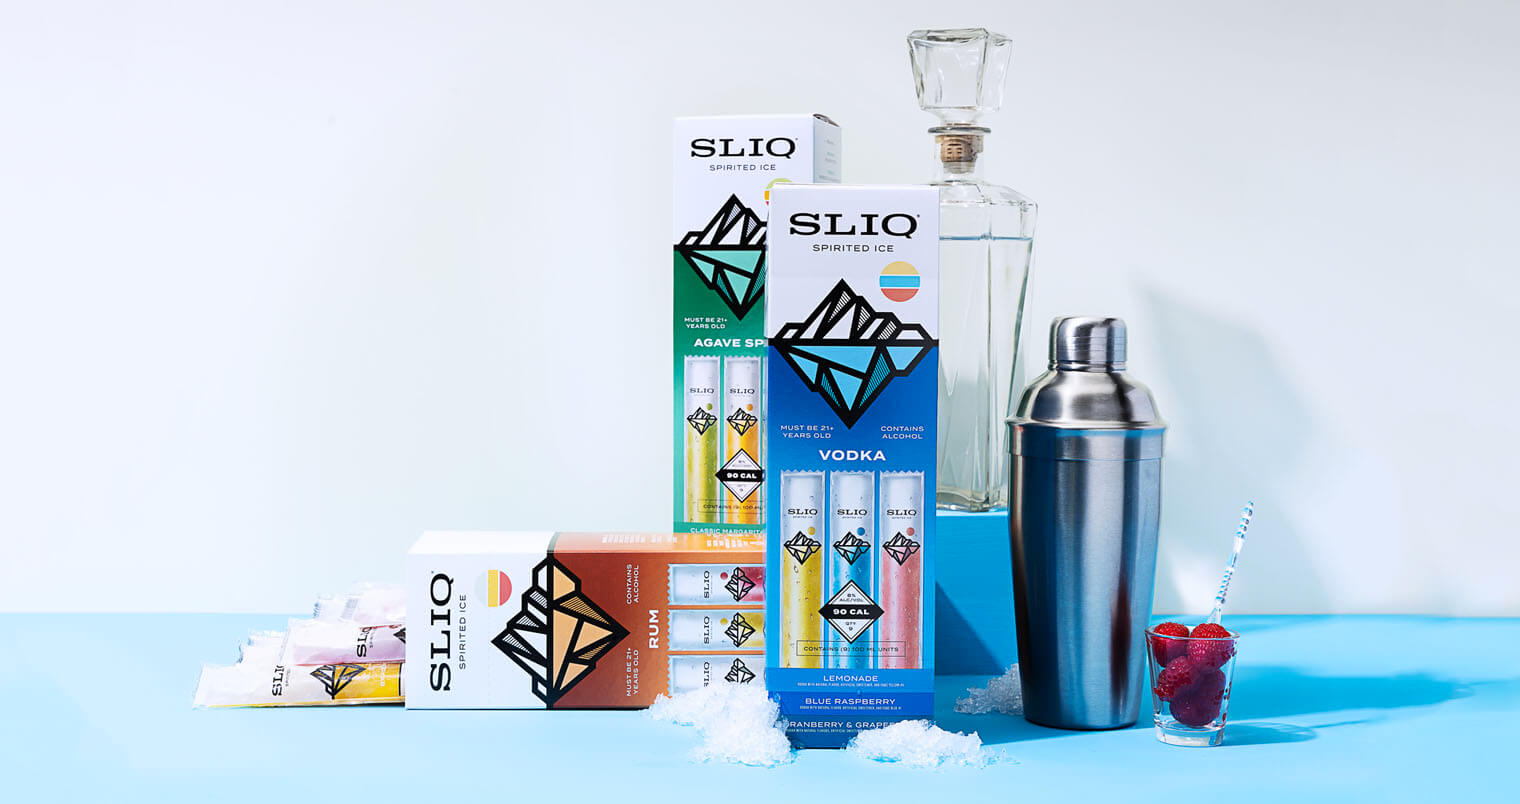 SILQ Spirited Ice, featured image